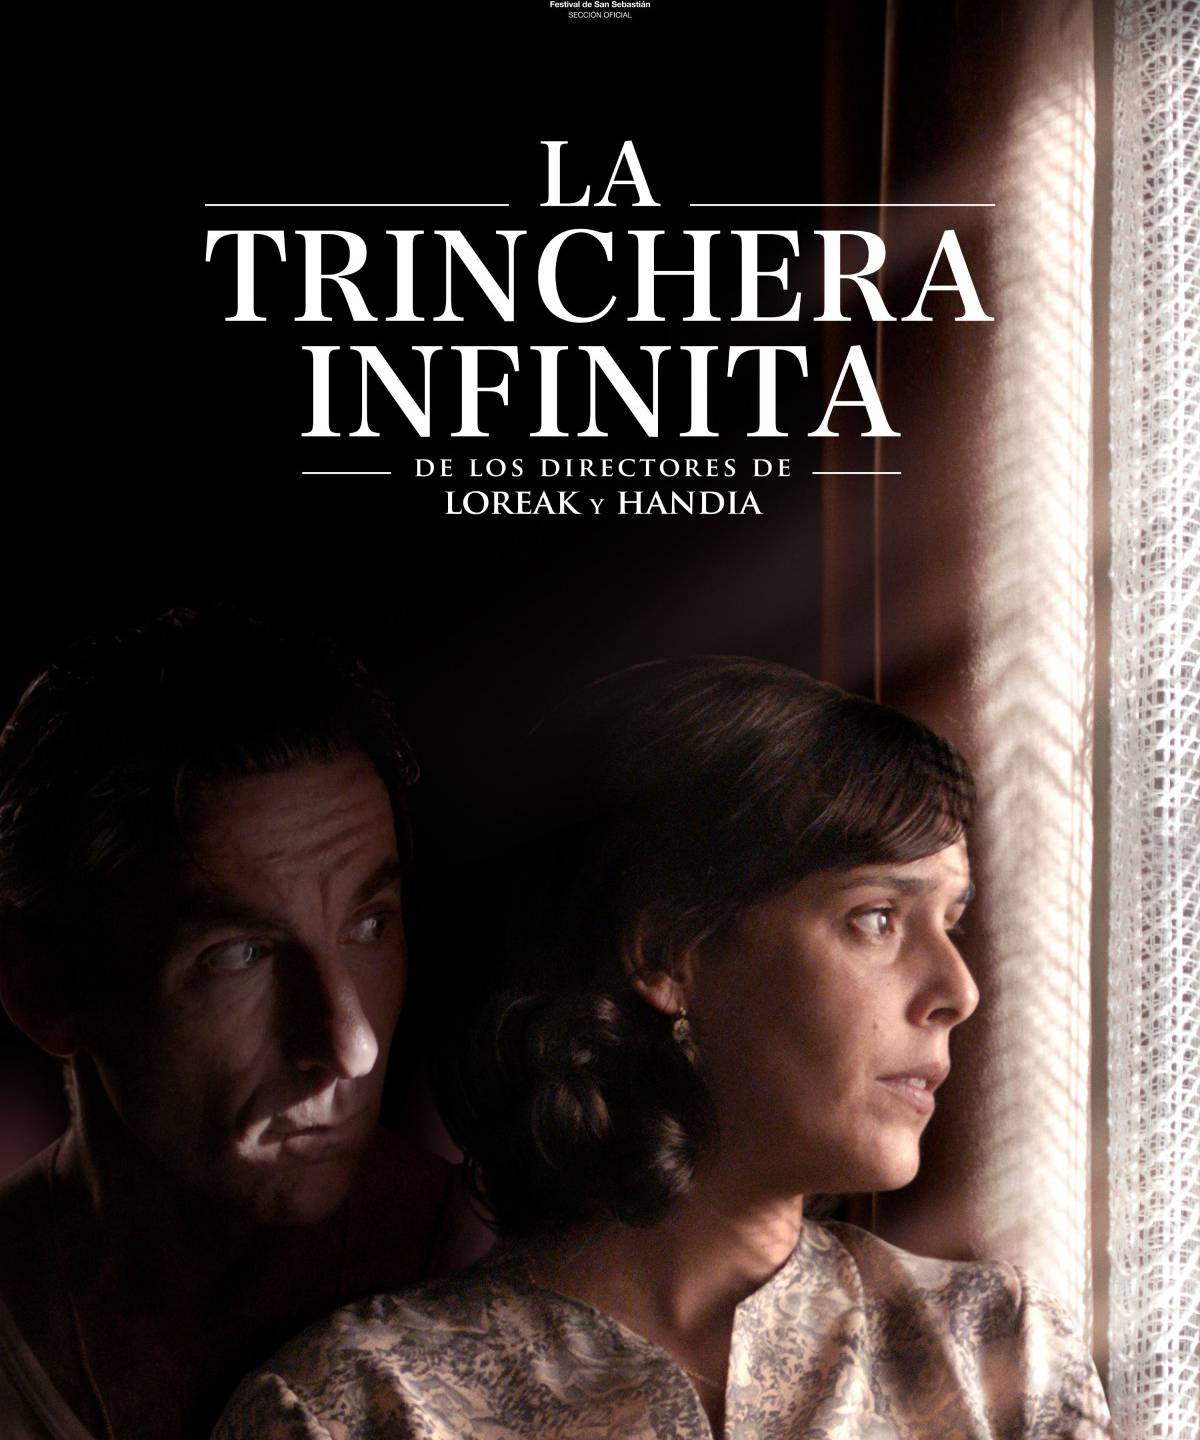 La trinchera infinita (Jon Garaño, Aitor Arregi y José Mari Goenaga)